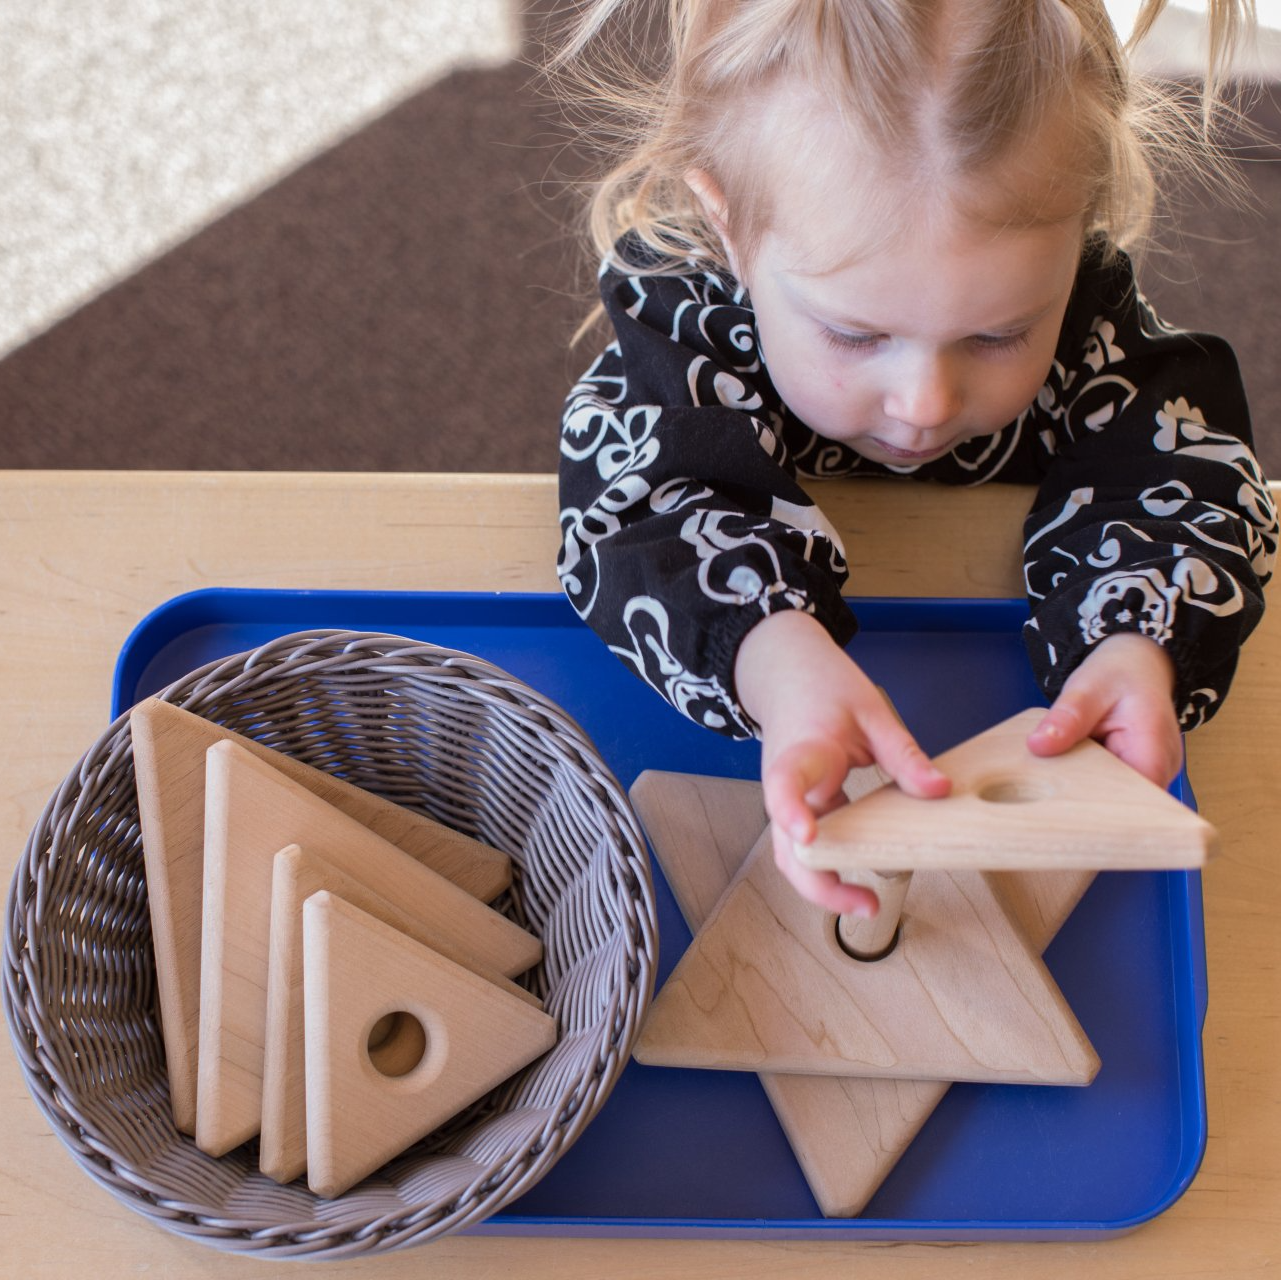 Child working with Montessori materials